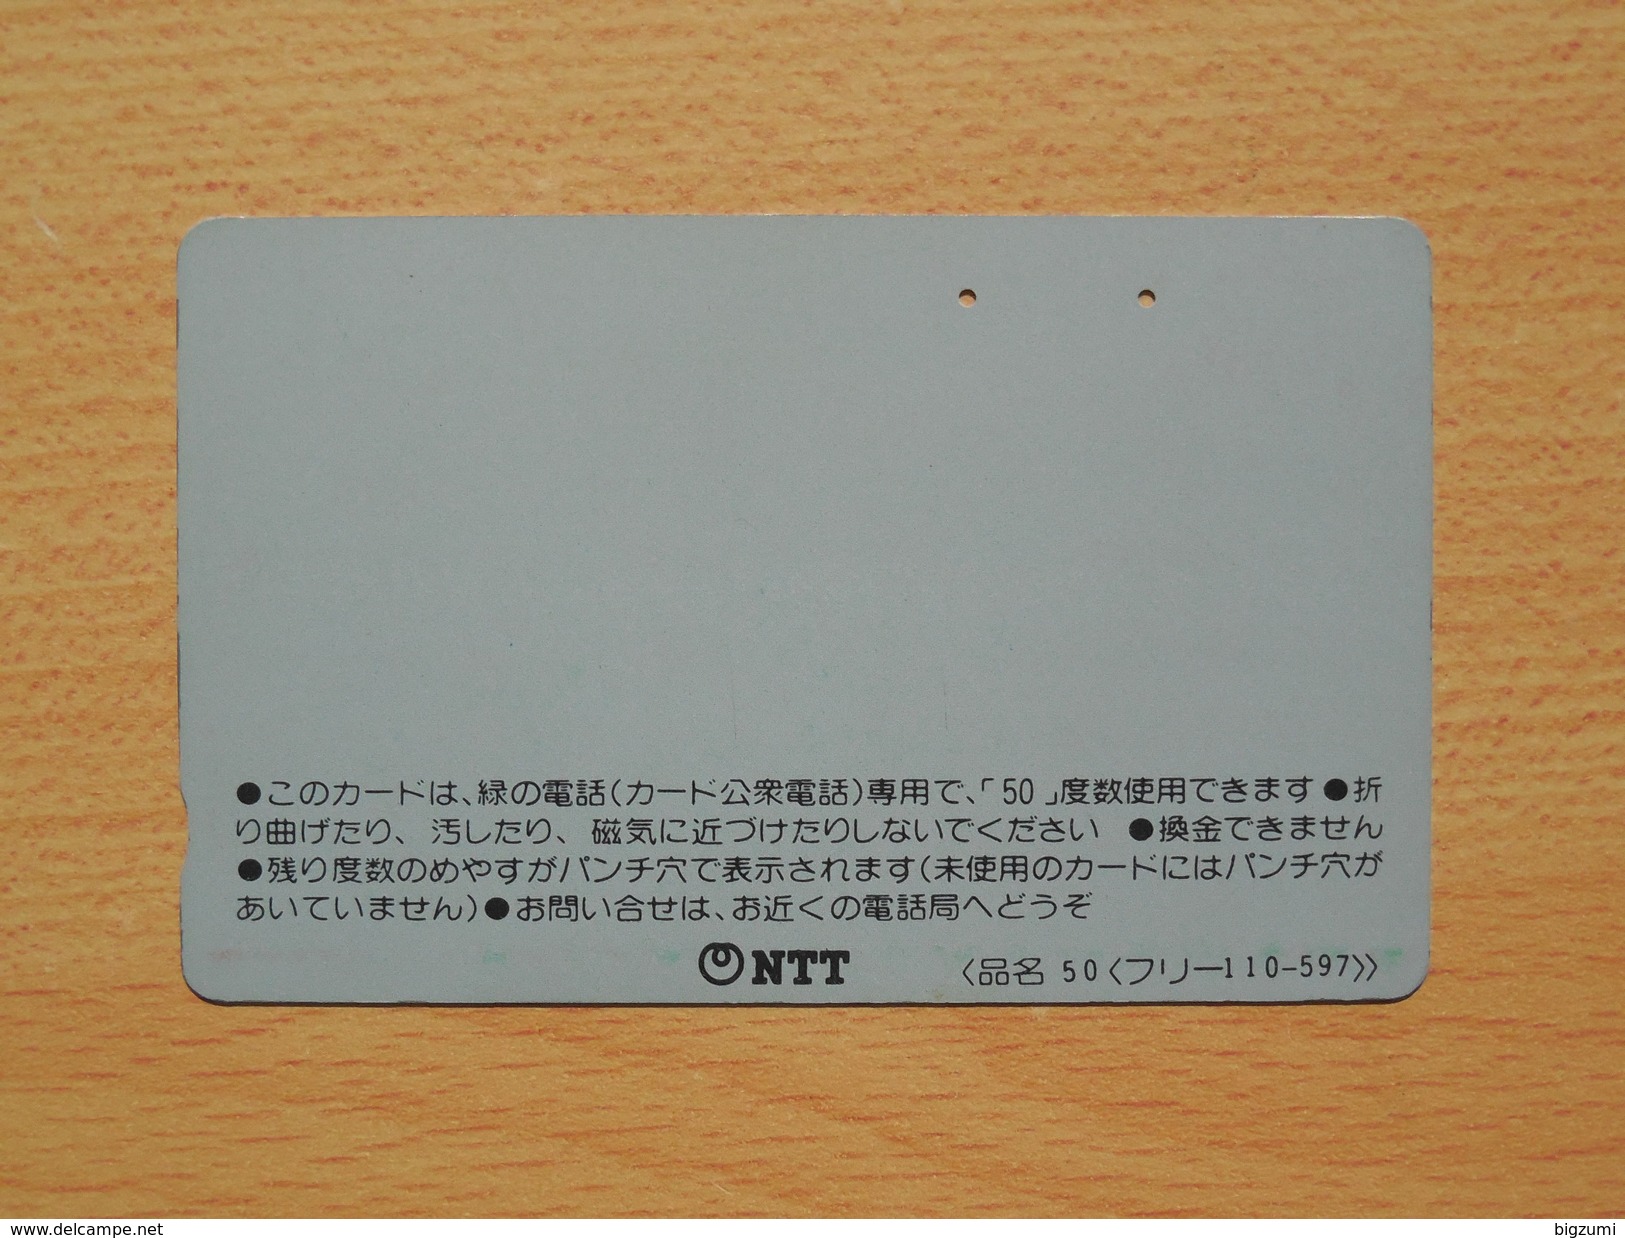 Japon Japan Free Front Bar Balken Phonecard - MOA Museum / 110-597 / - Japan